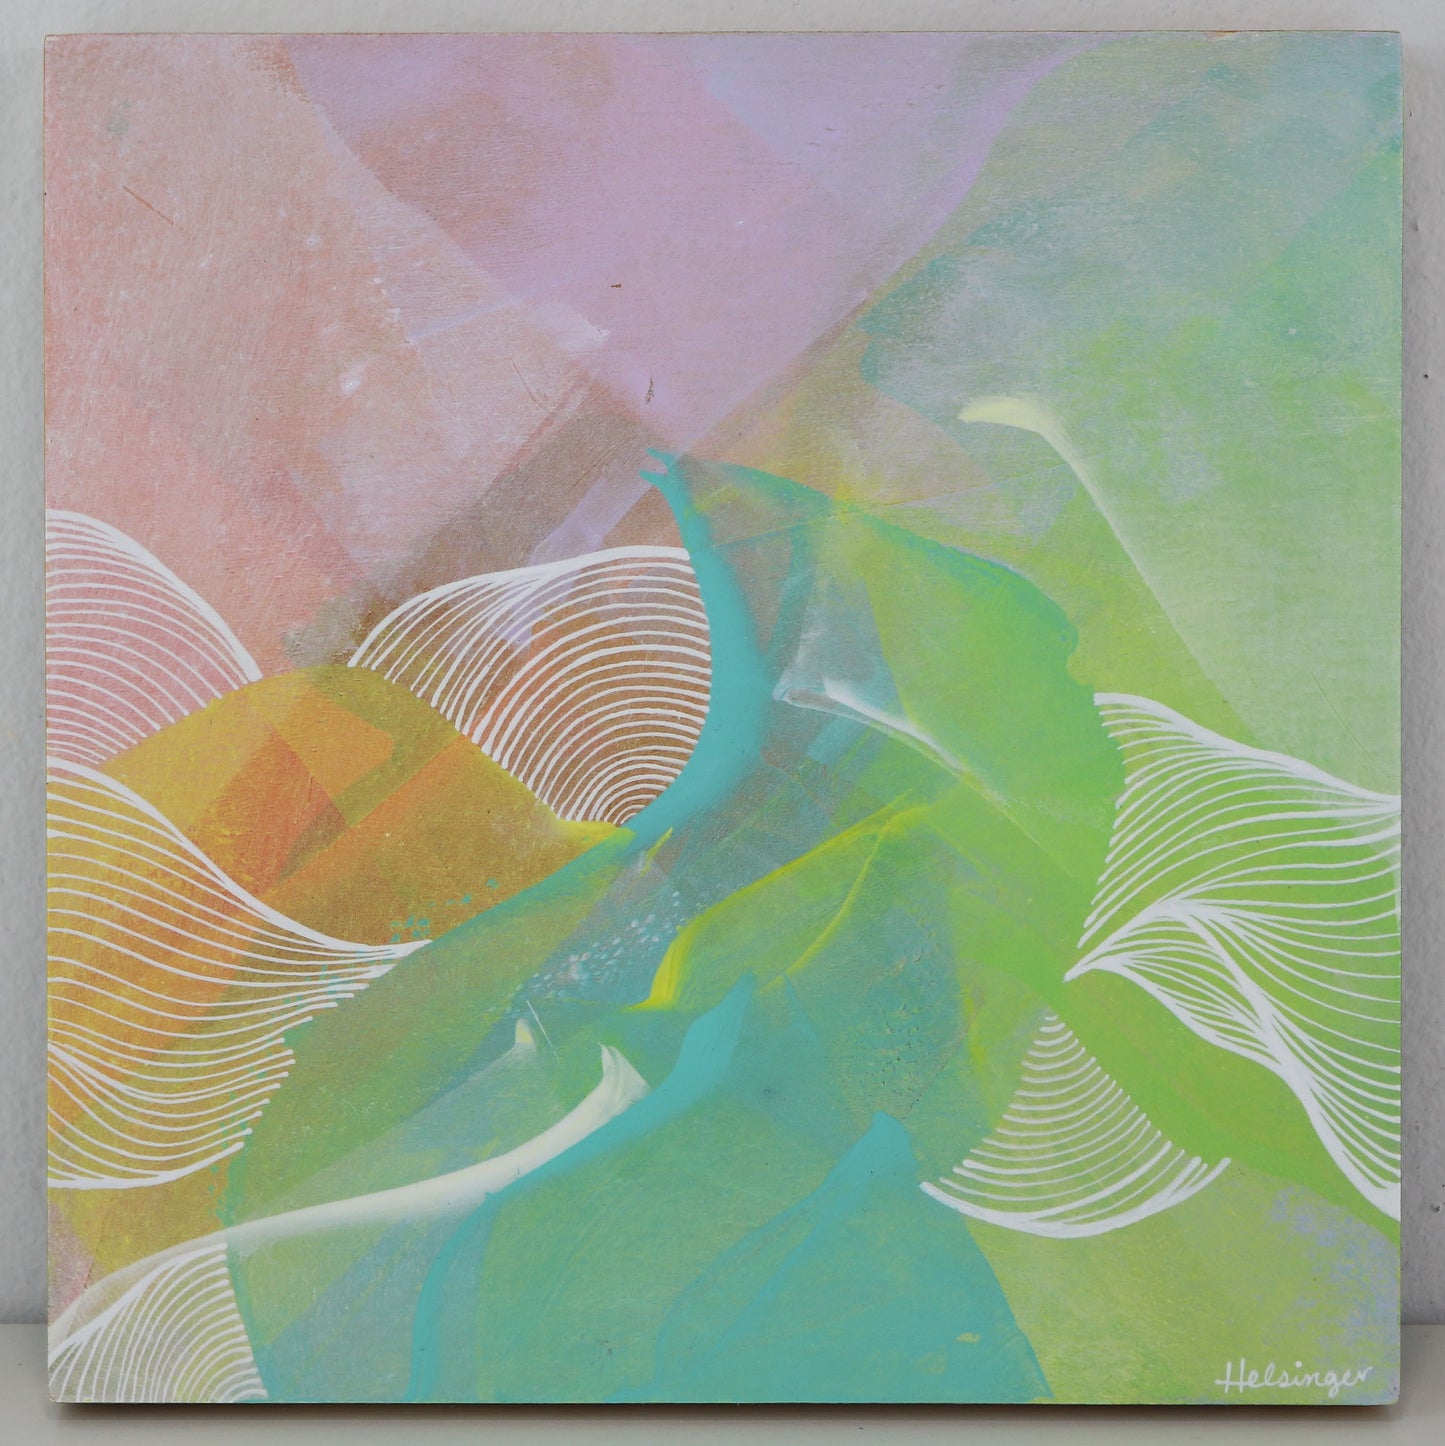 8"x8" Original Painting: "Dreamy Flow State III"